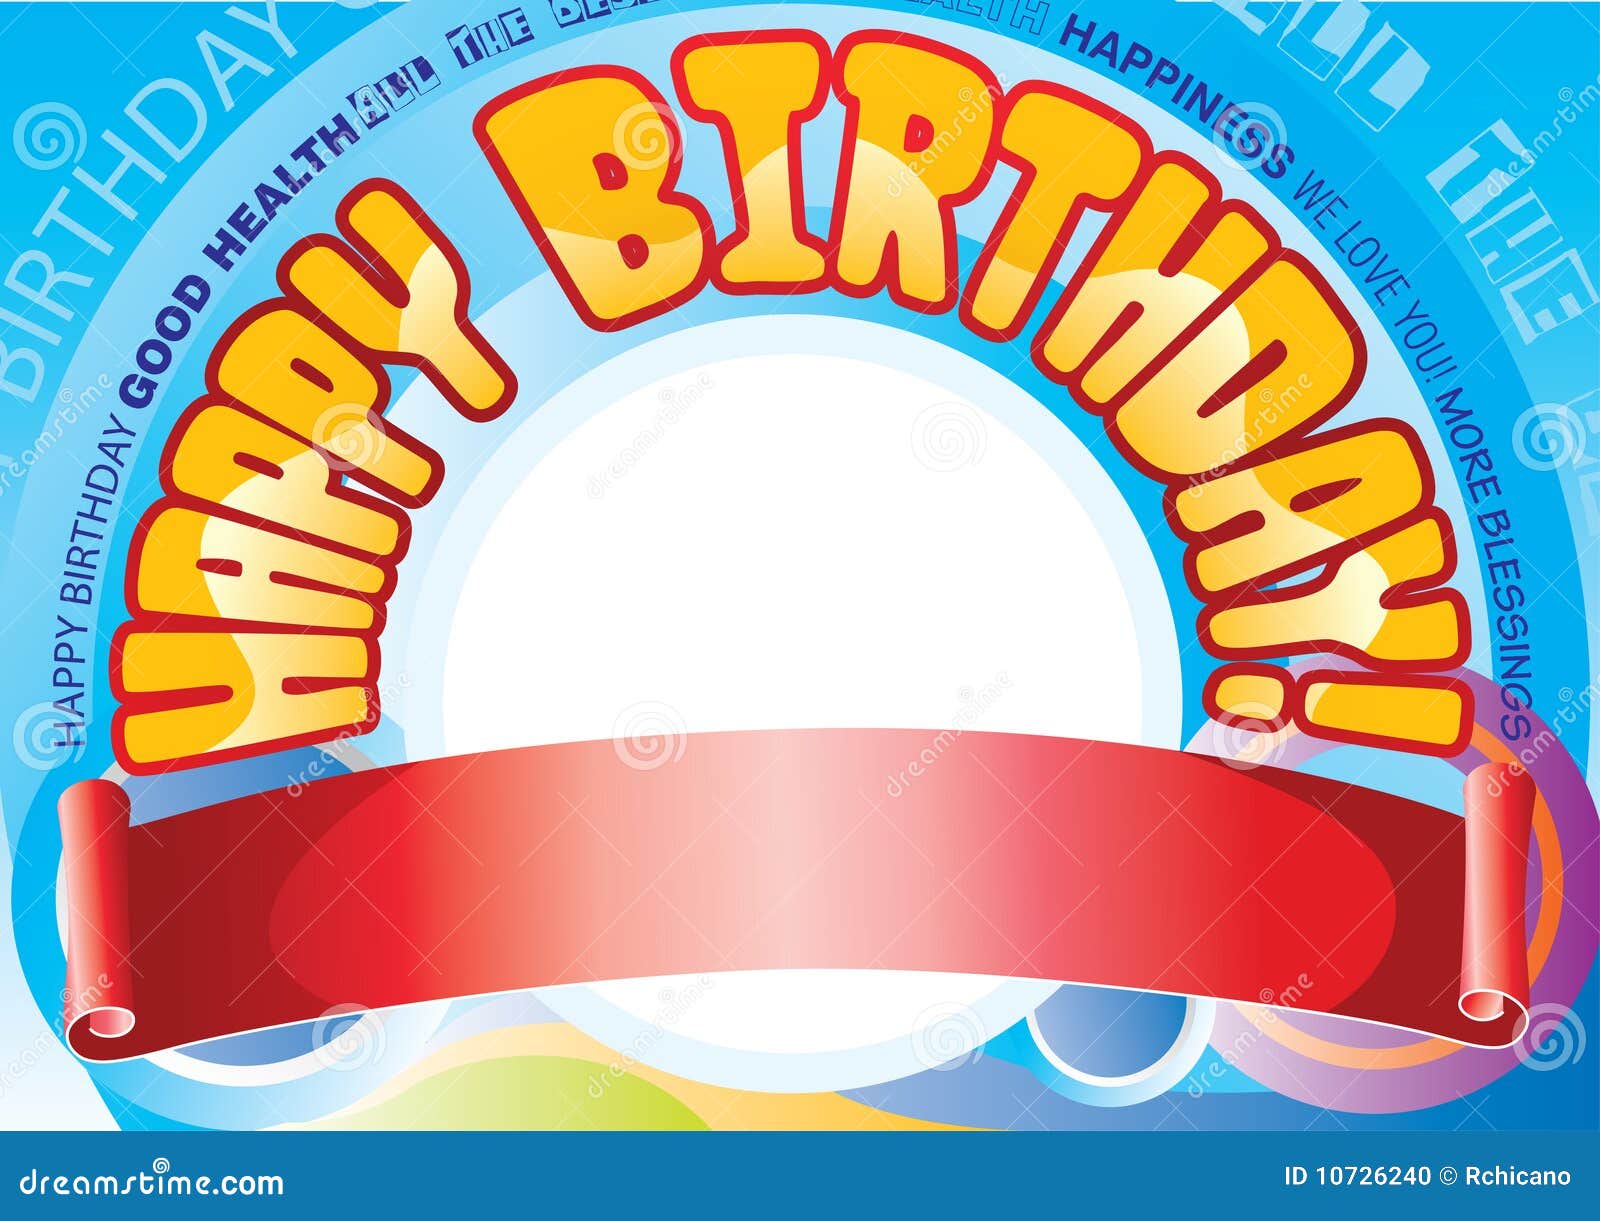 Birthday banner stock vector. Illustration of greetings - 10726240